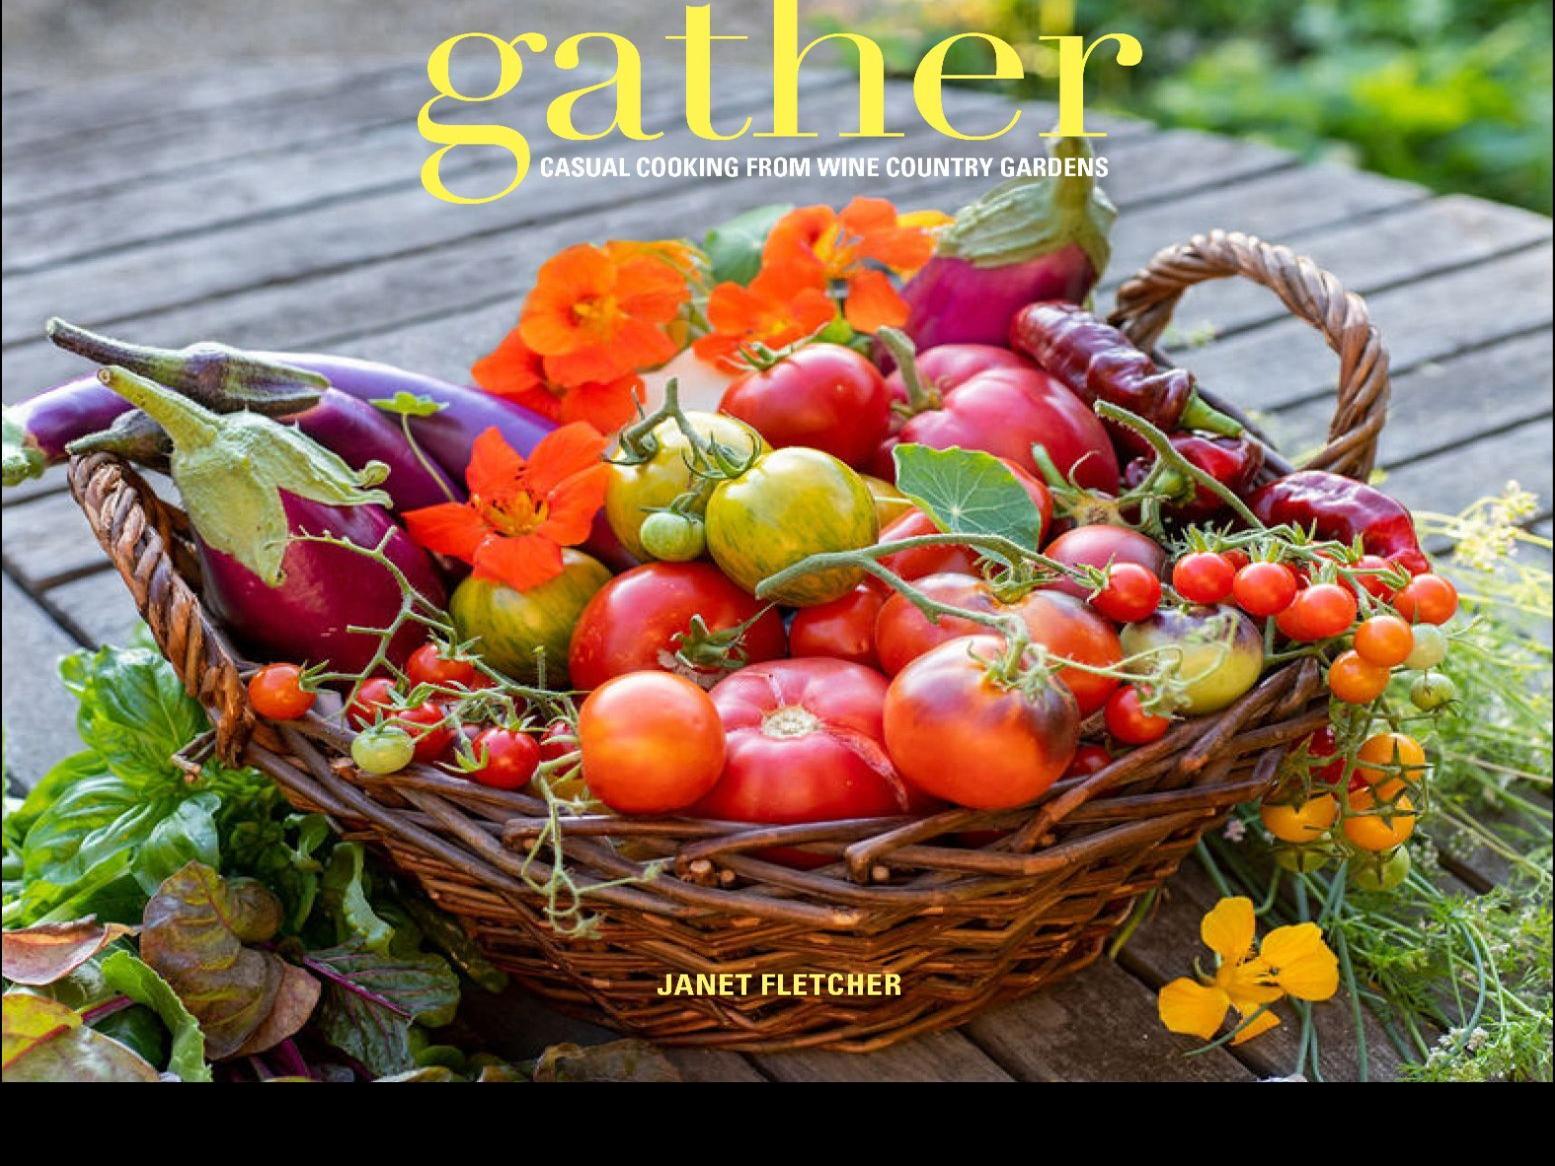 Napa Valley S Janet Fletcher Publishes New Cookbook Food Napavalleyregister Com